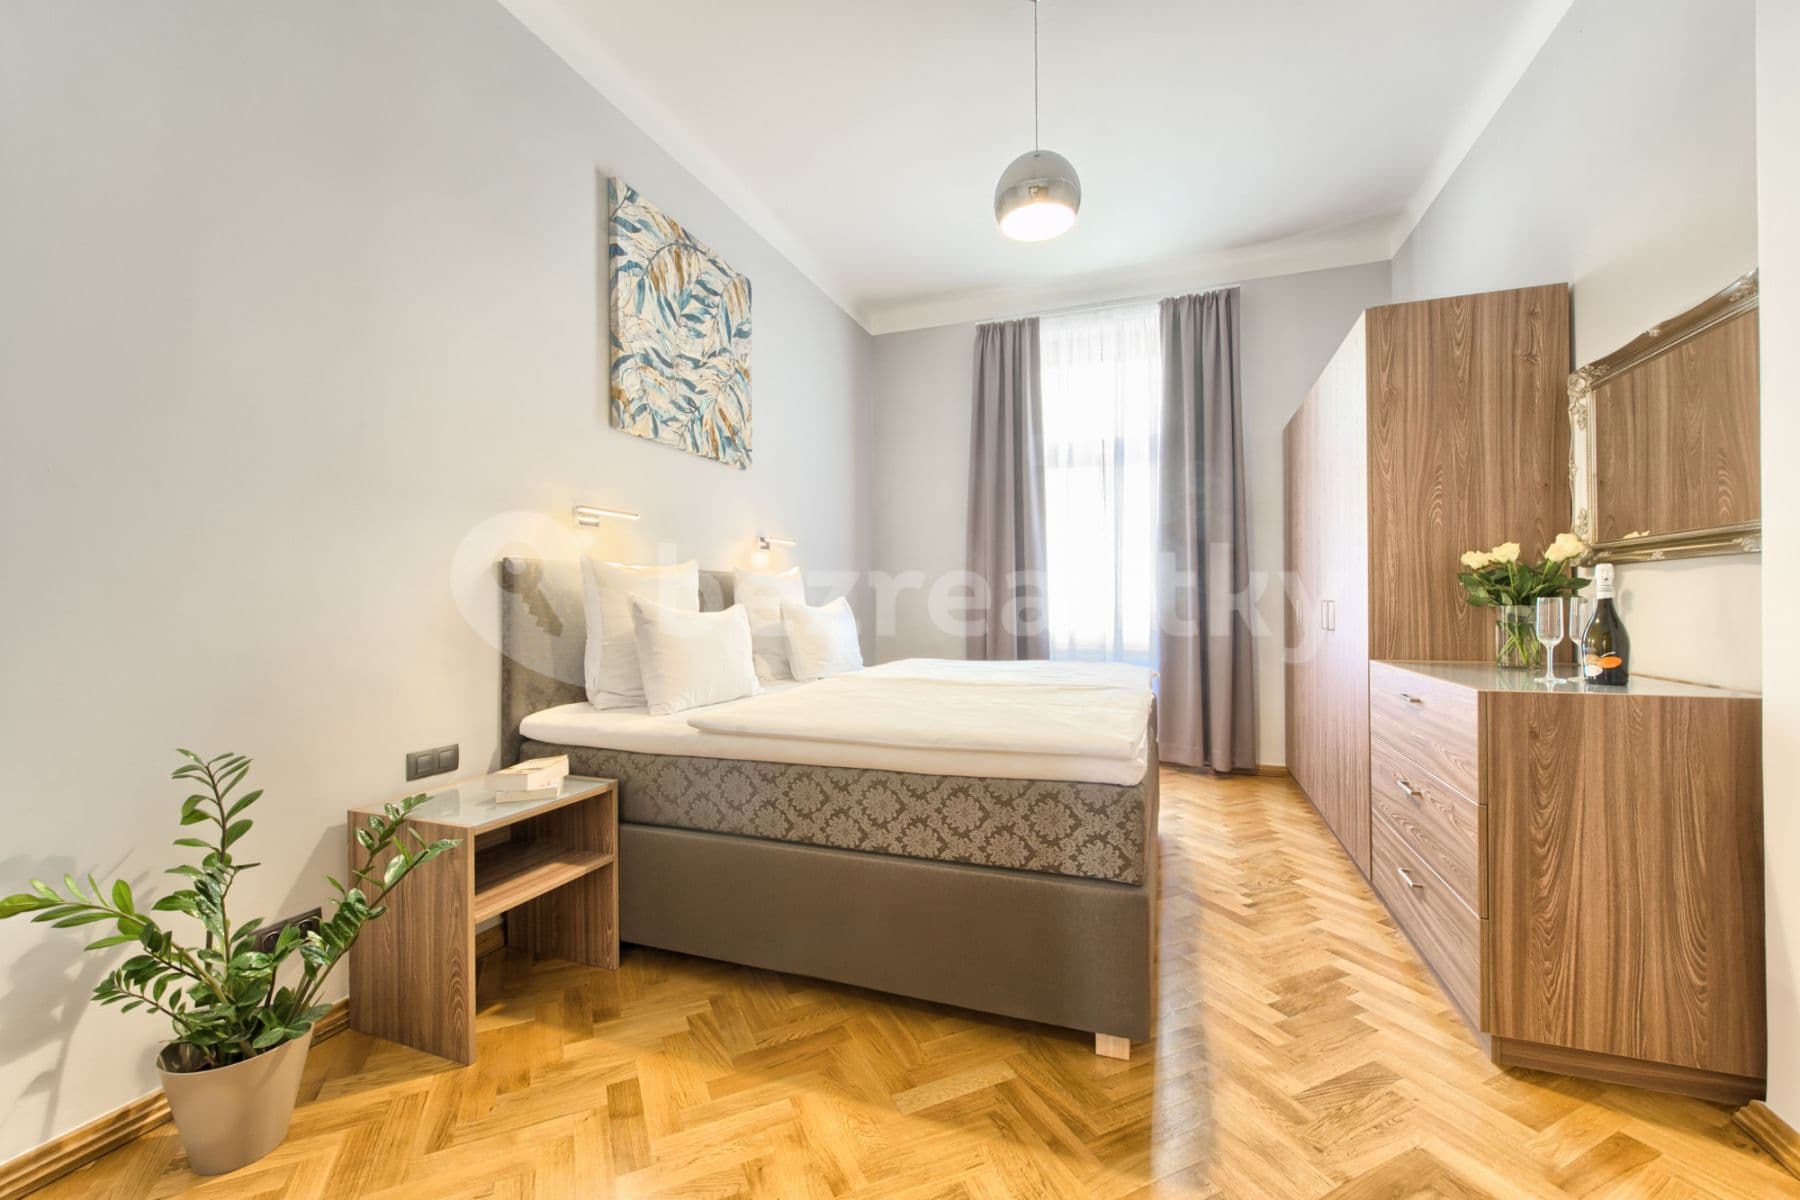 3 bedroom flat to rent, 97 m², Dušní, Prague, Prague